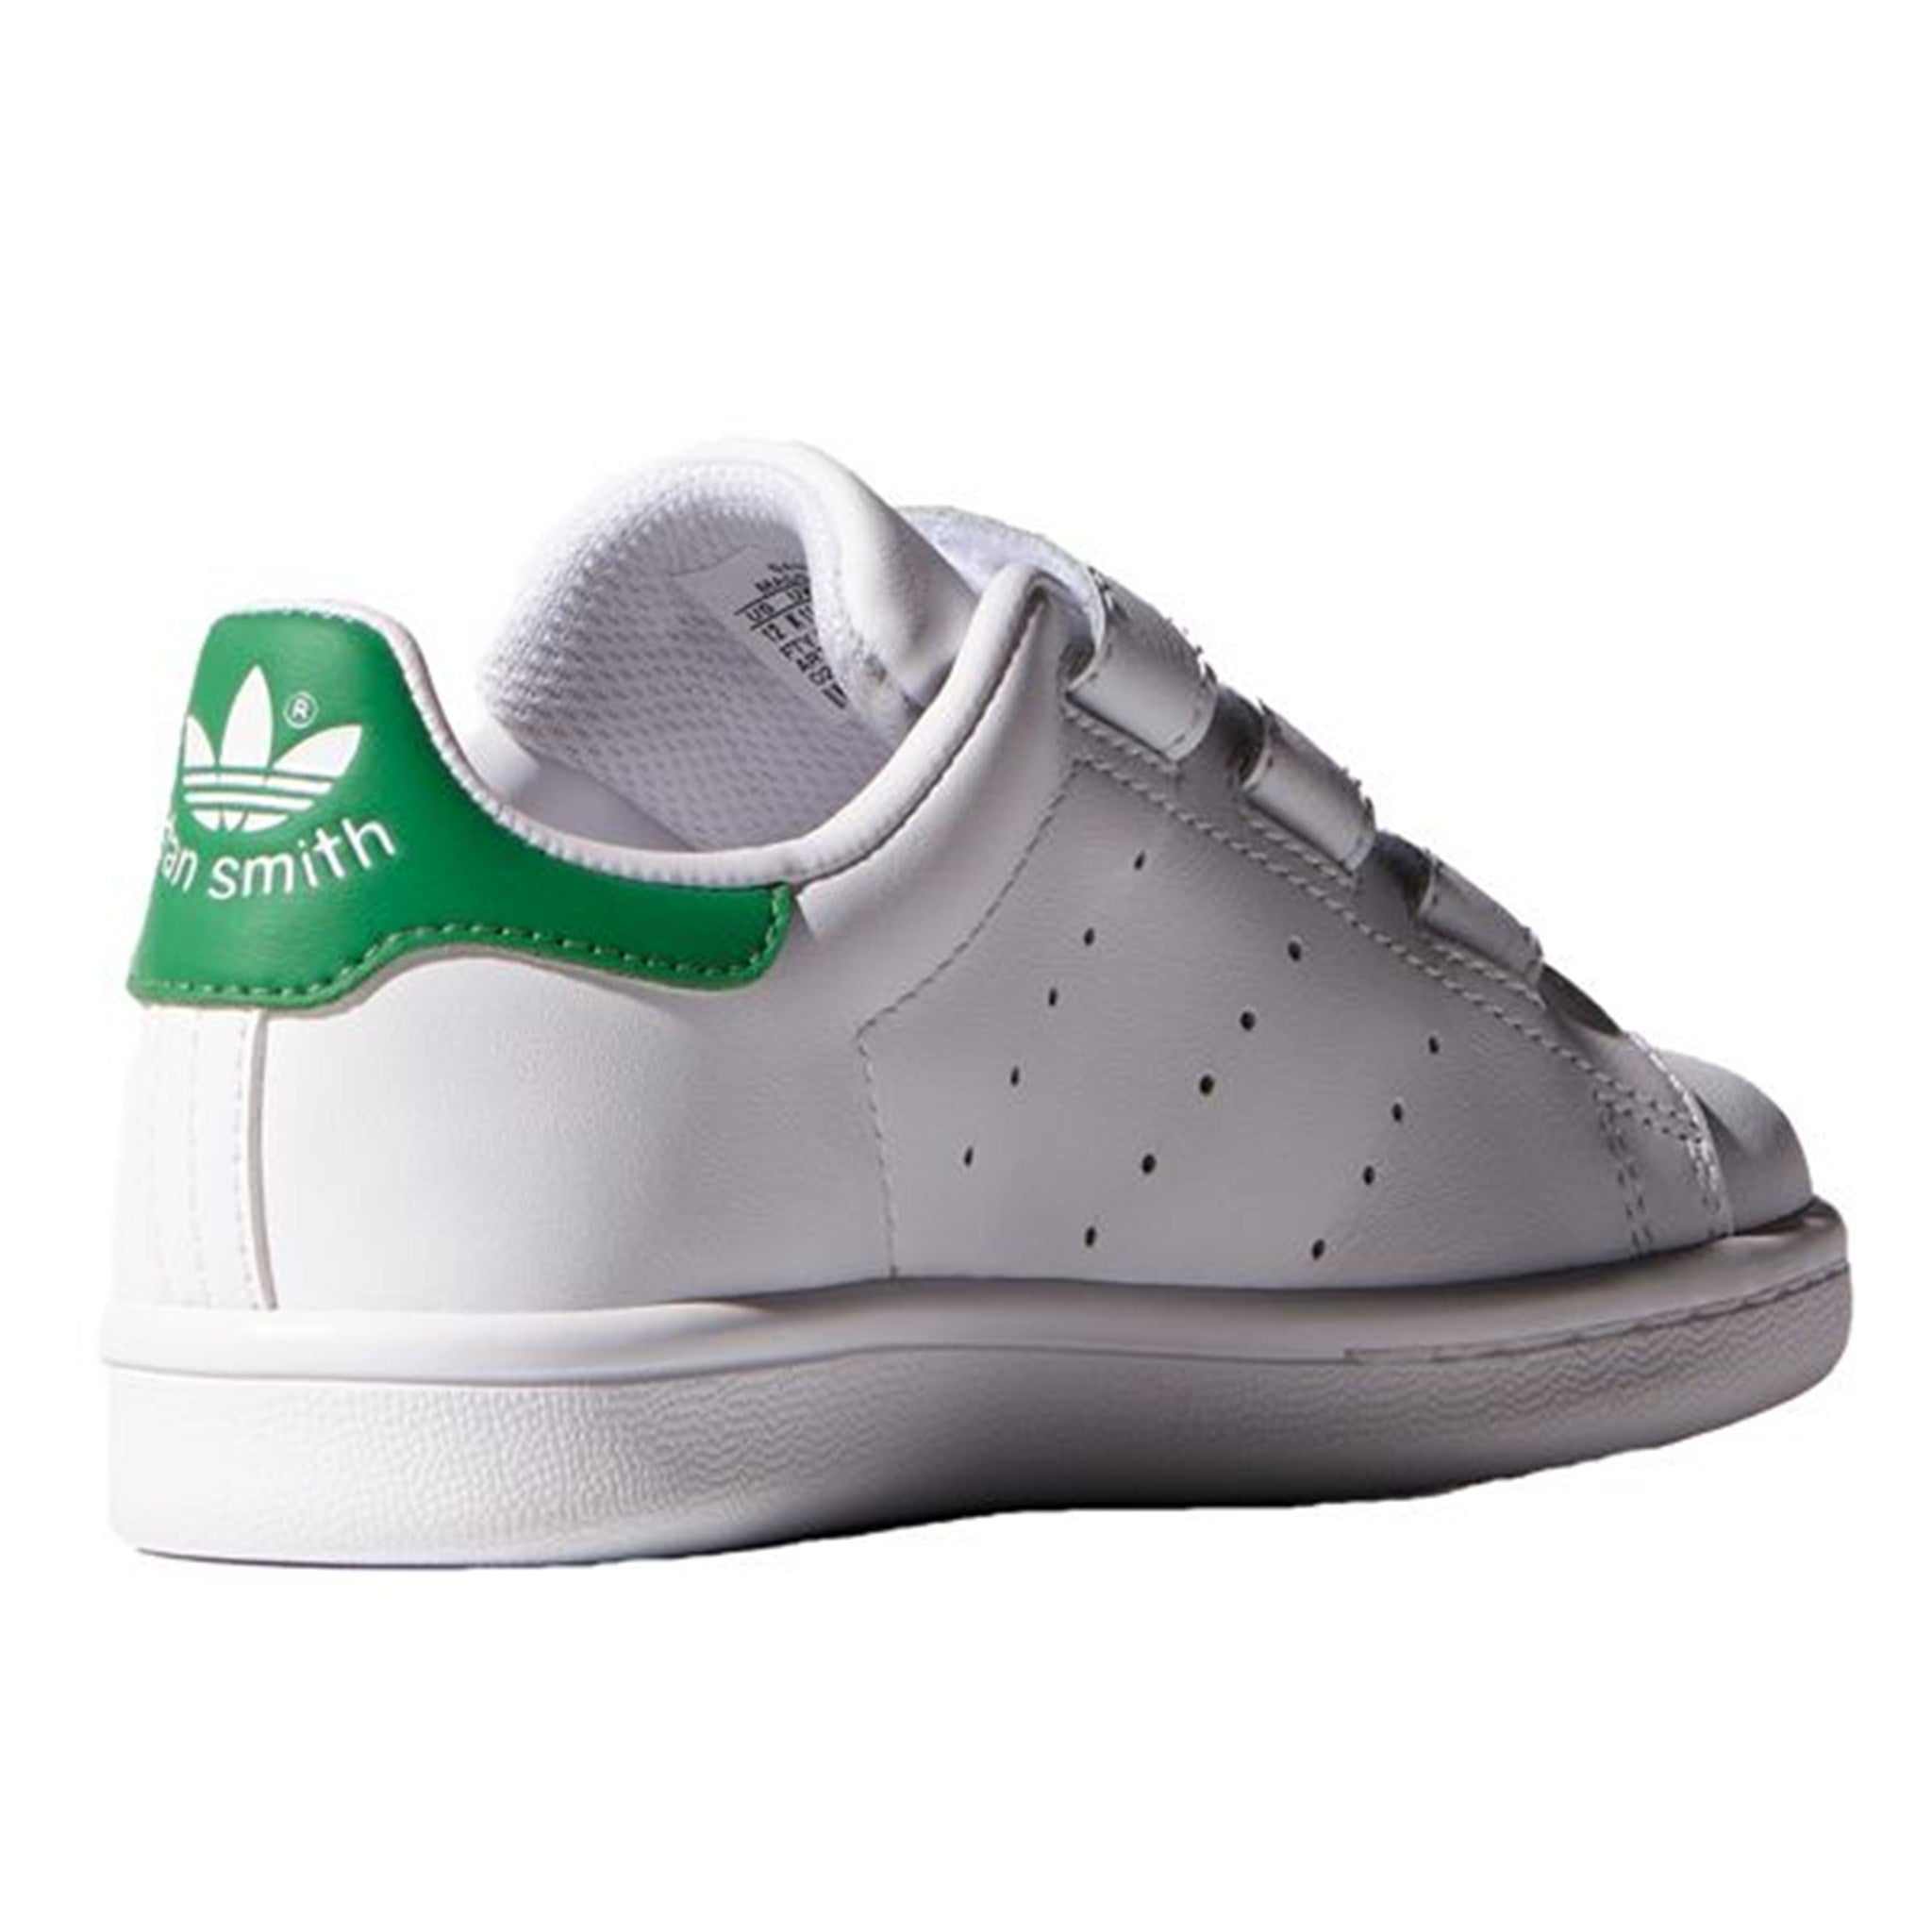 adidas Originals Stan Smith Sneakers White/Green 2